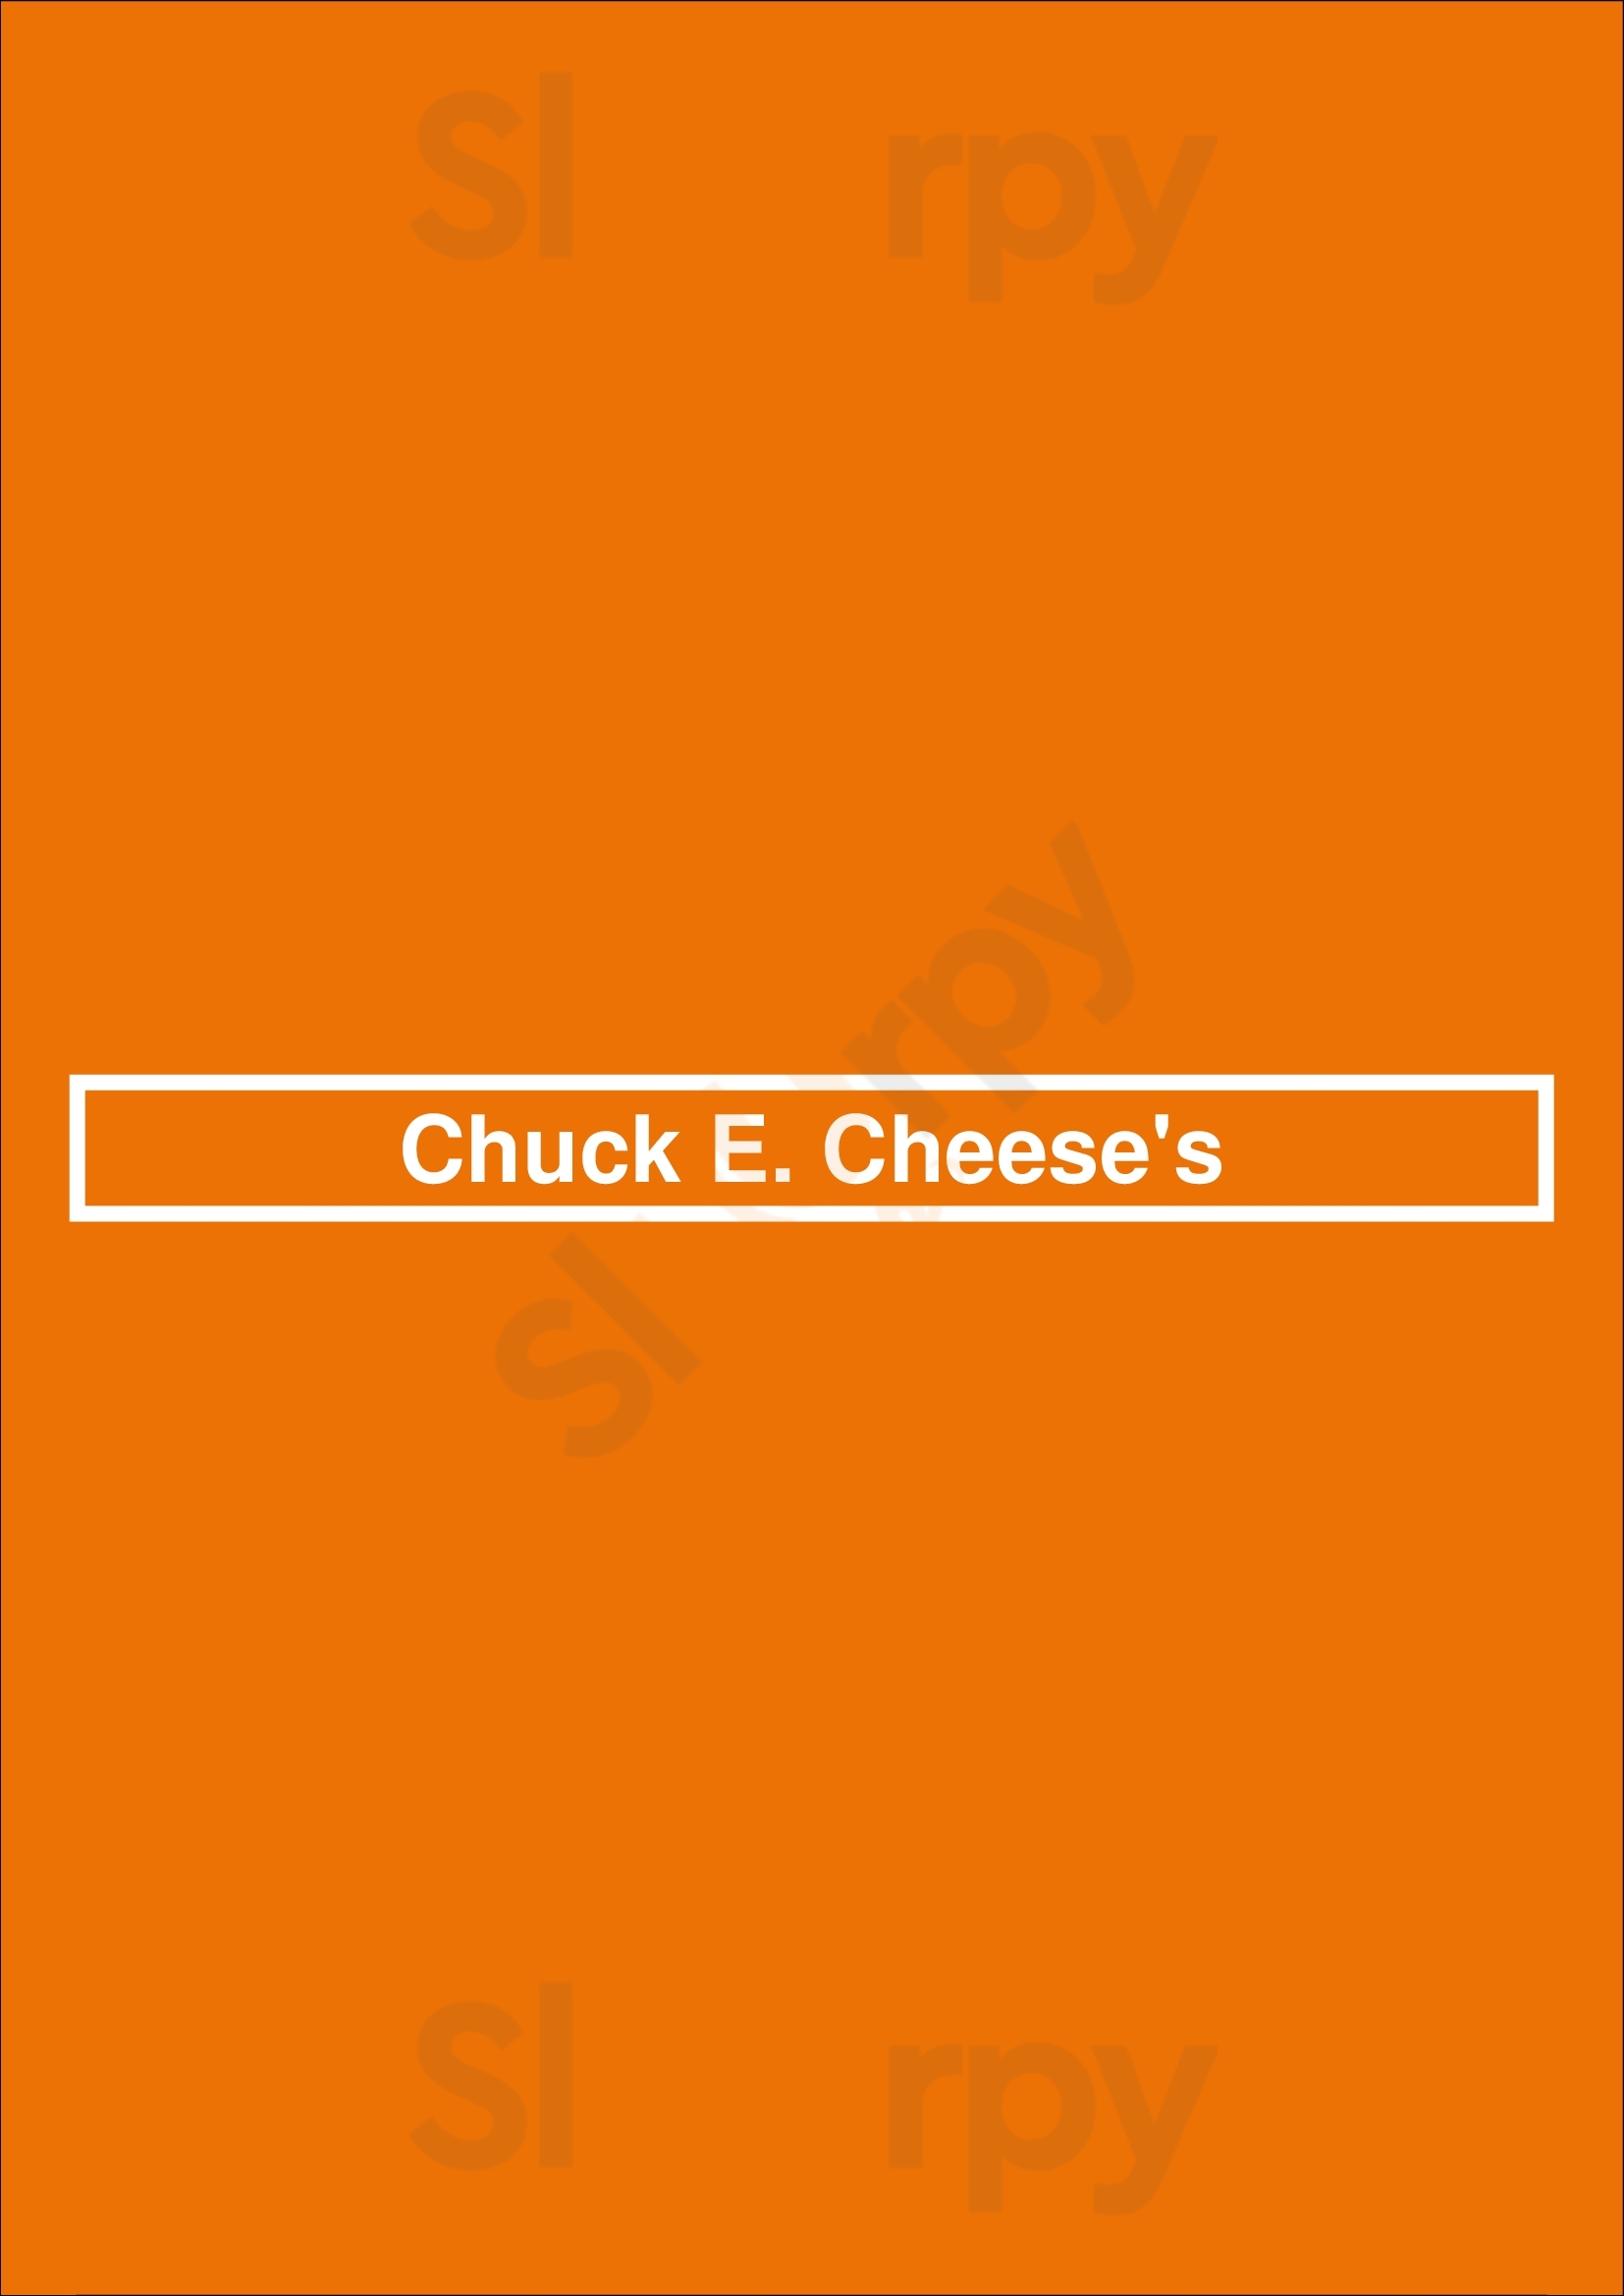 Chuck E. Cheese Charlotte Menu - 1